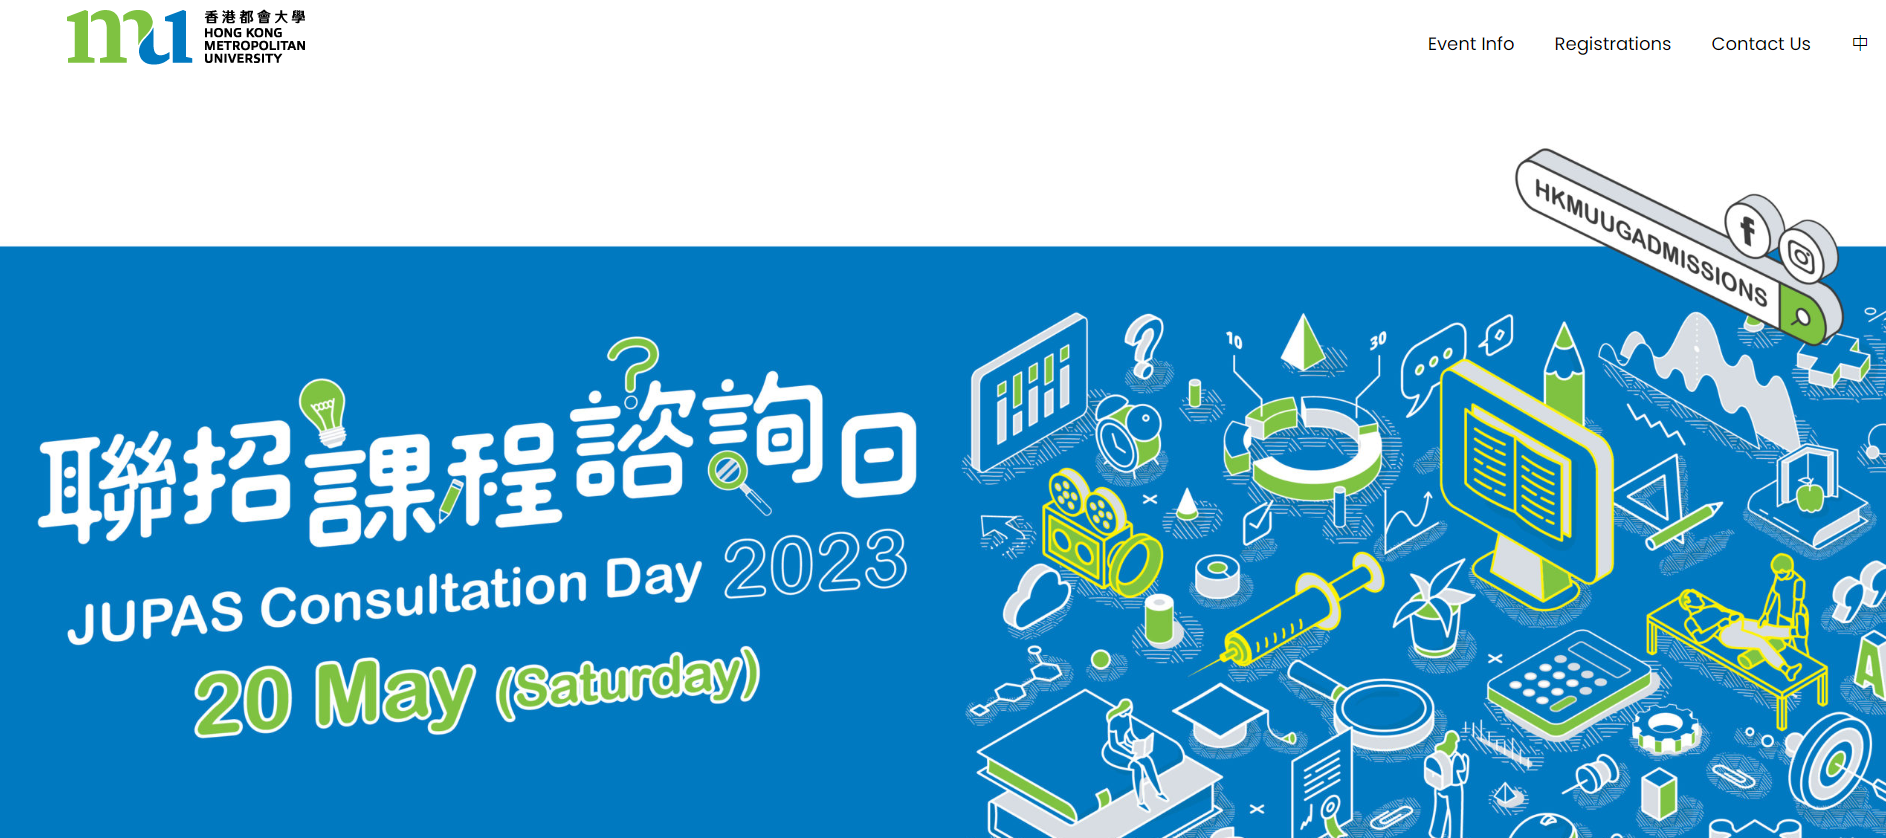 HKMU JUPAS Consultation Day 2023